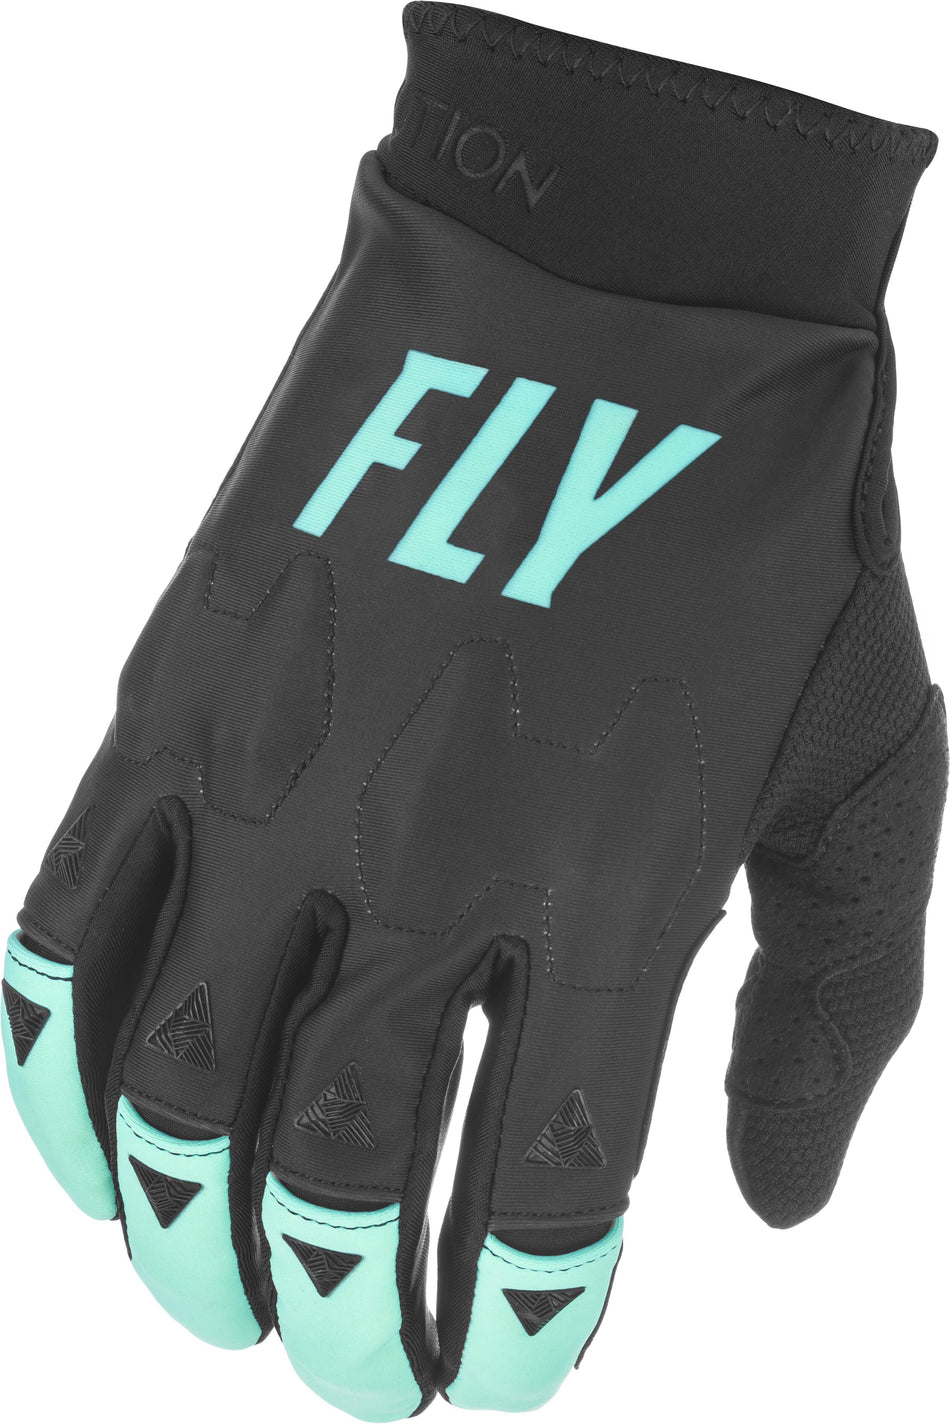 FLY RACING Evolution Dst L.E. Gloves Mint/Black Sz 12 374-11912